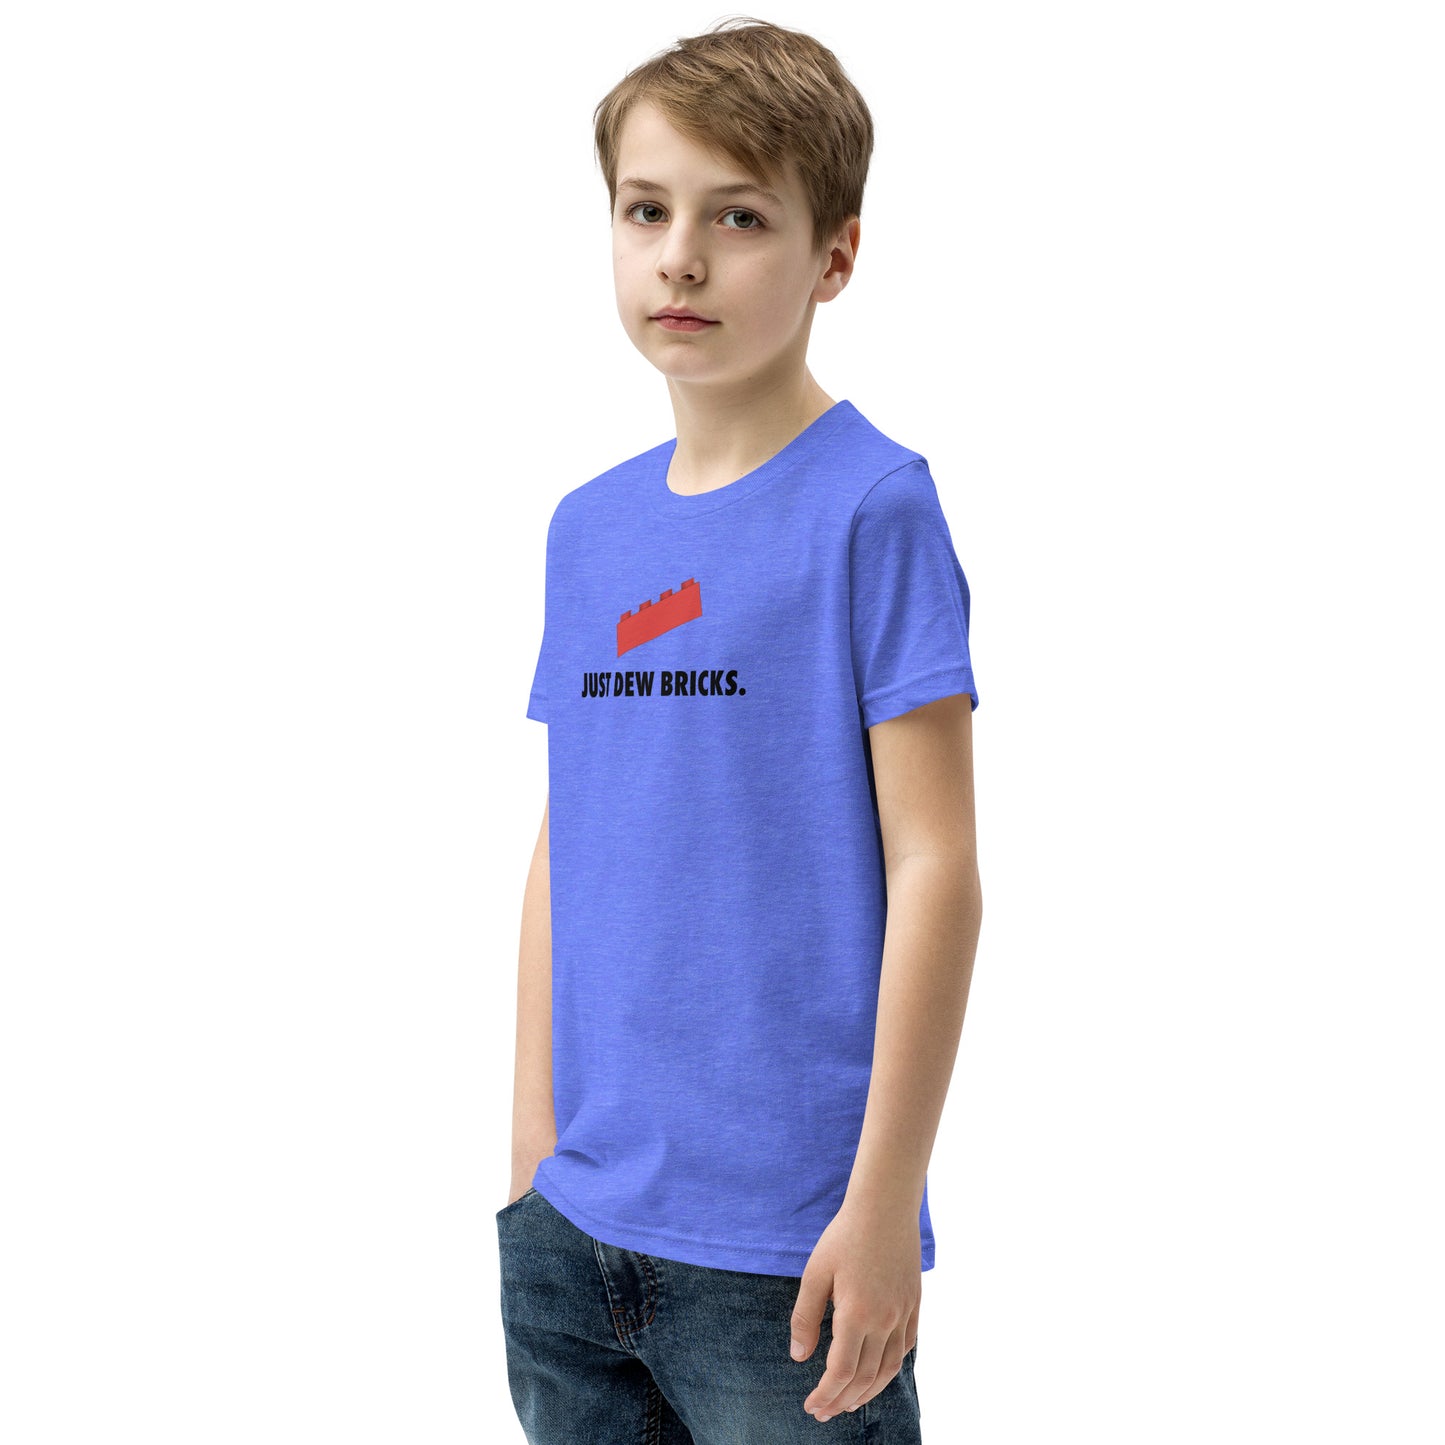 Just Dew Bricks - Youth Short Sleeve T-Shirt